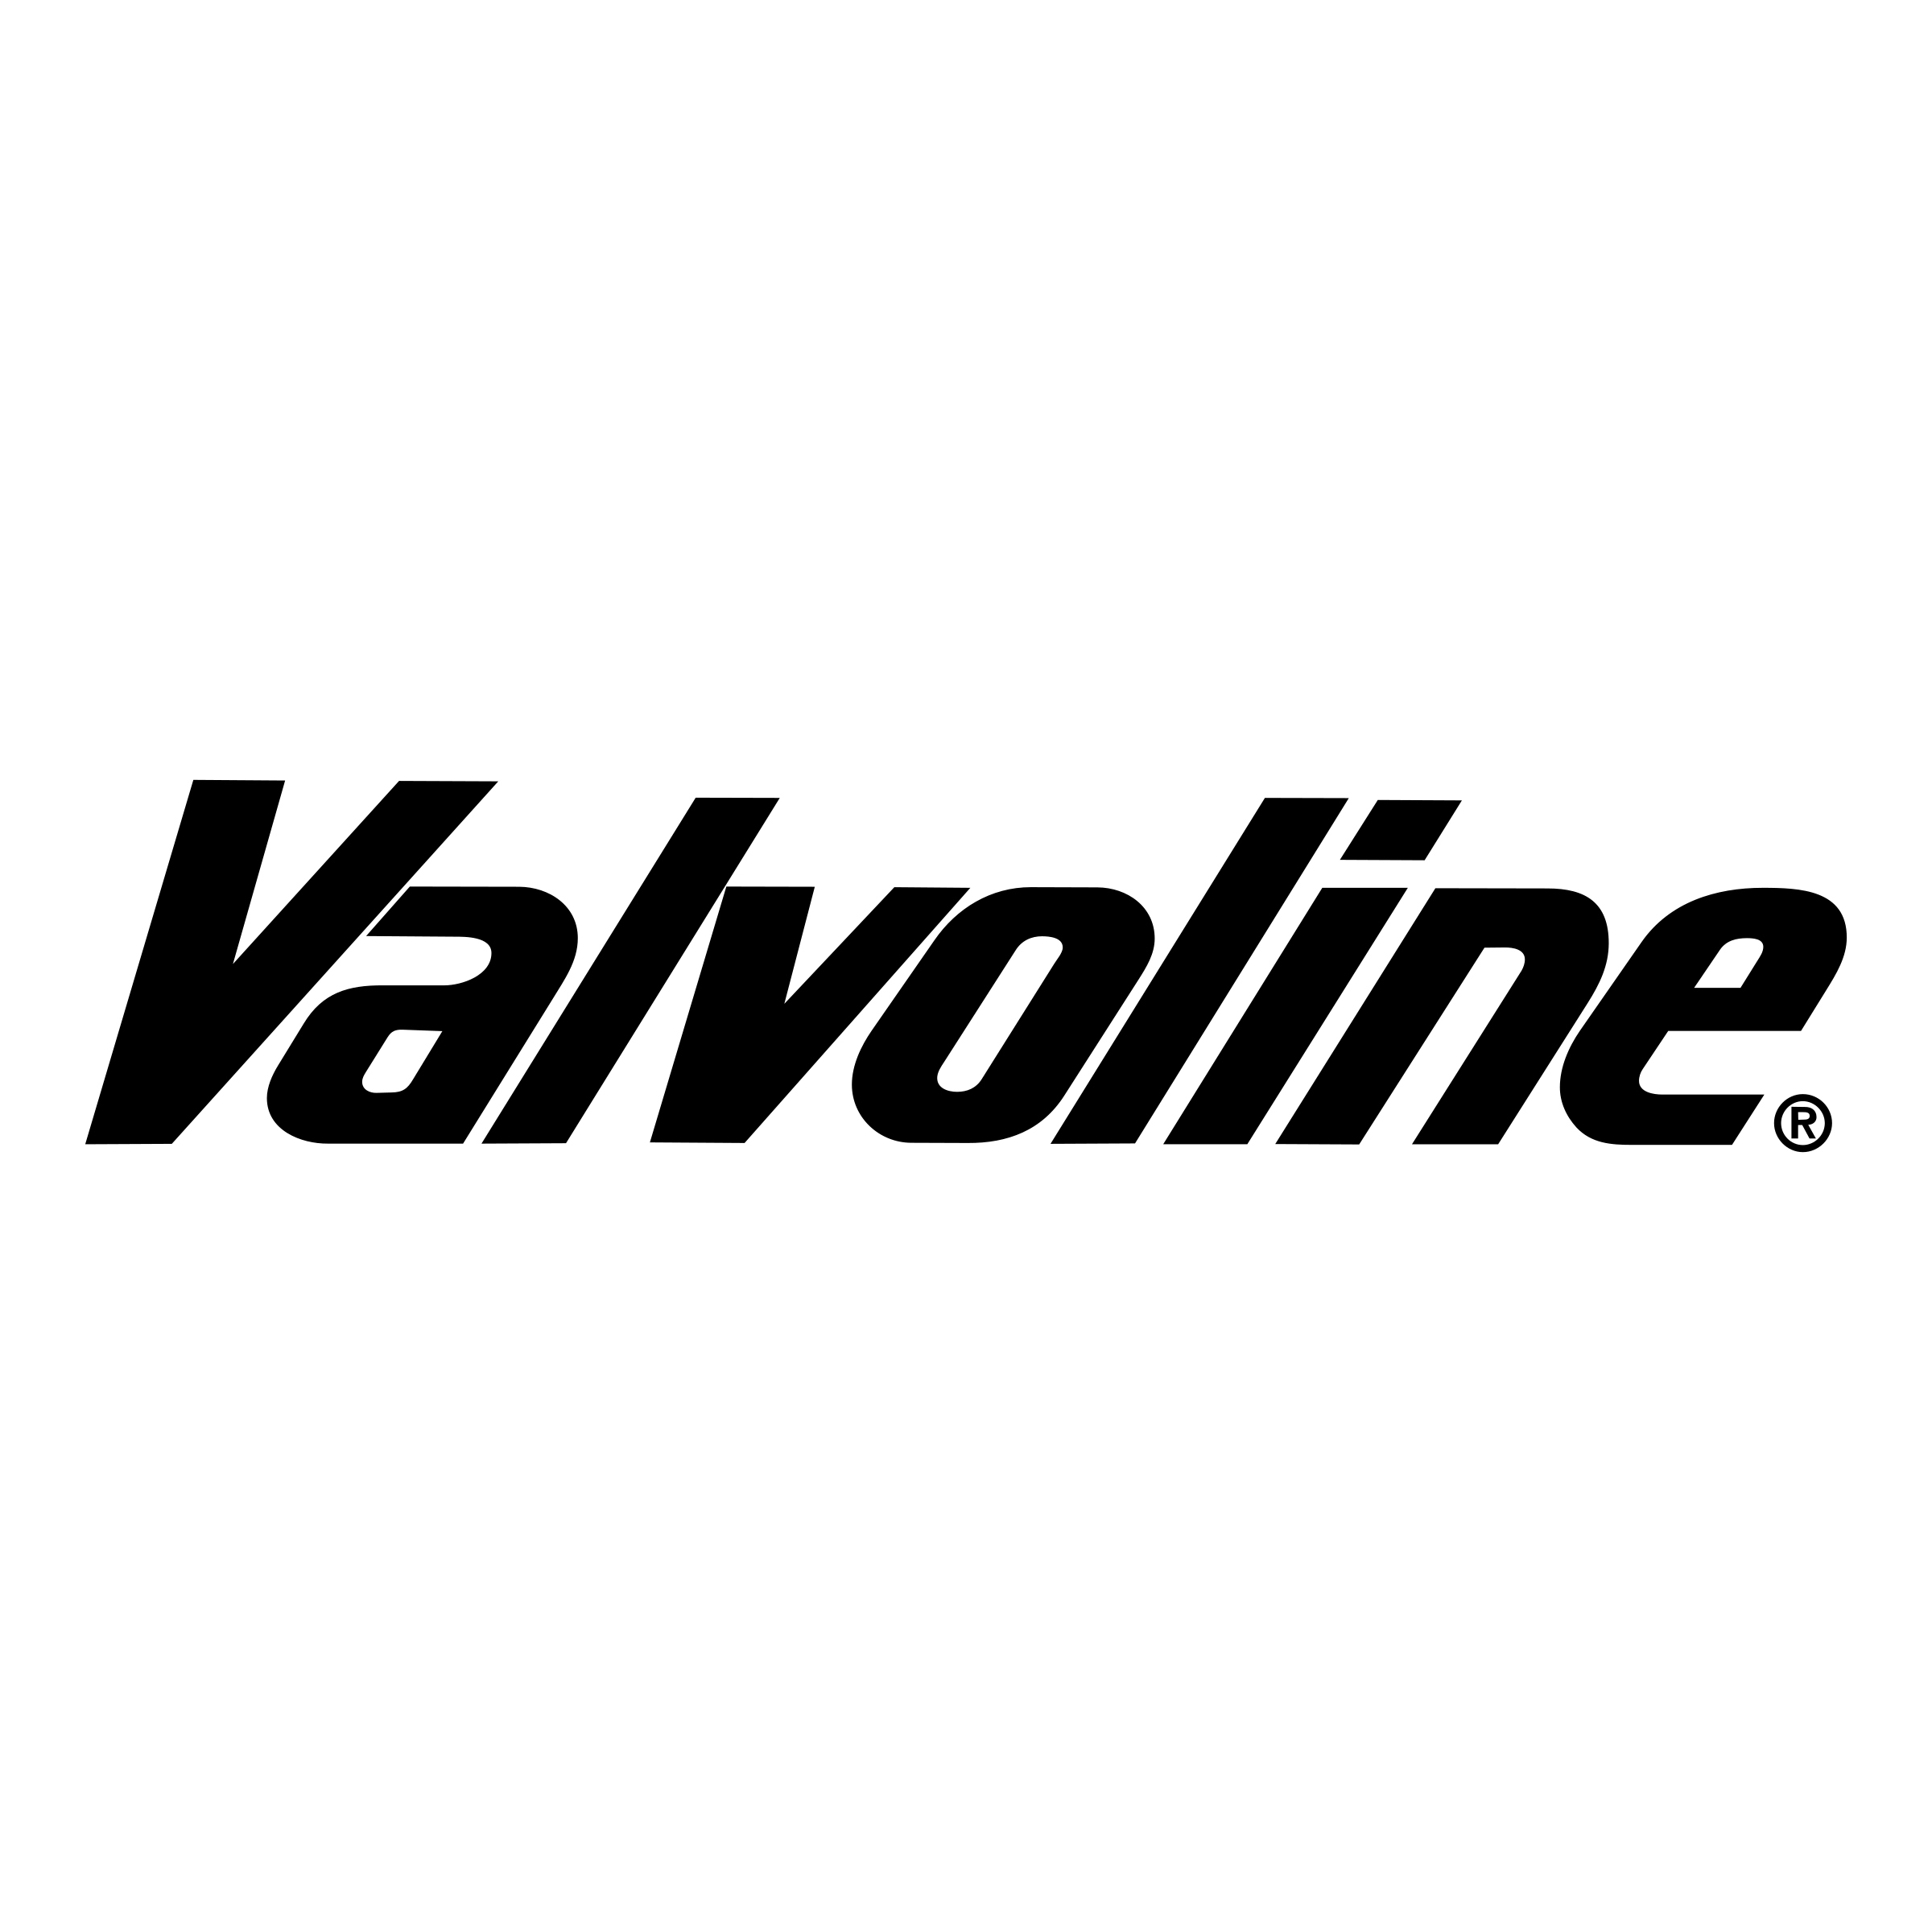 Valvoline Logo - Valvoline Logo PNG Transparent & SVG Vector